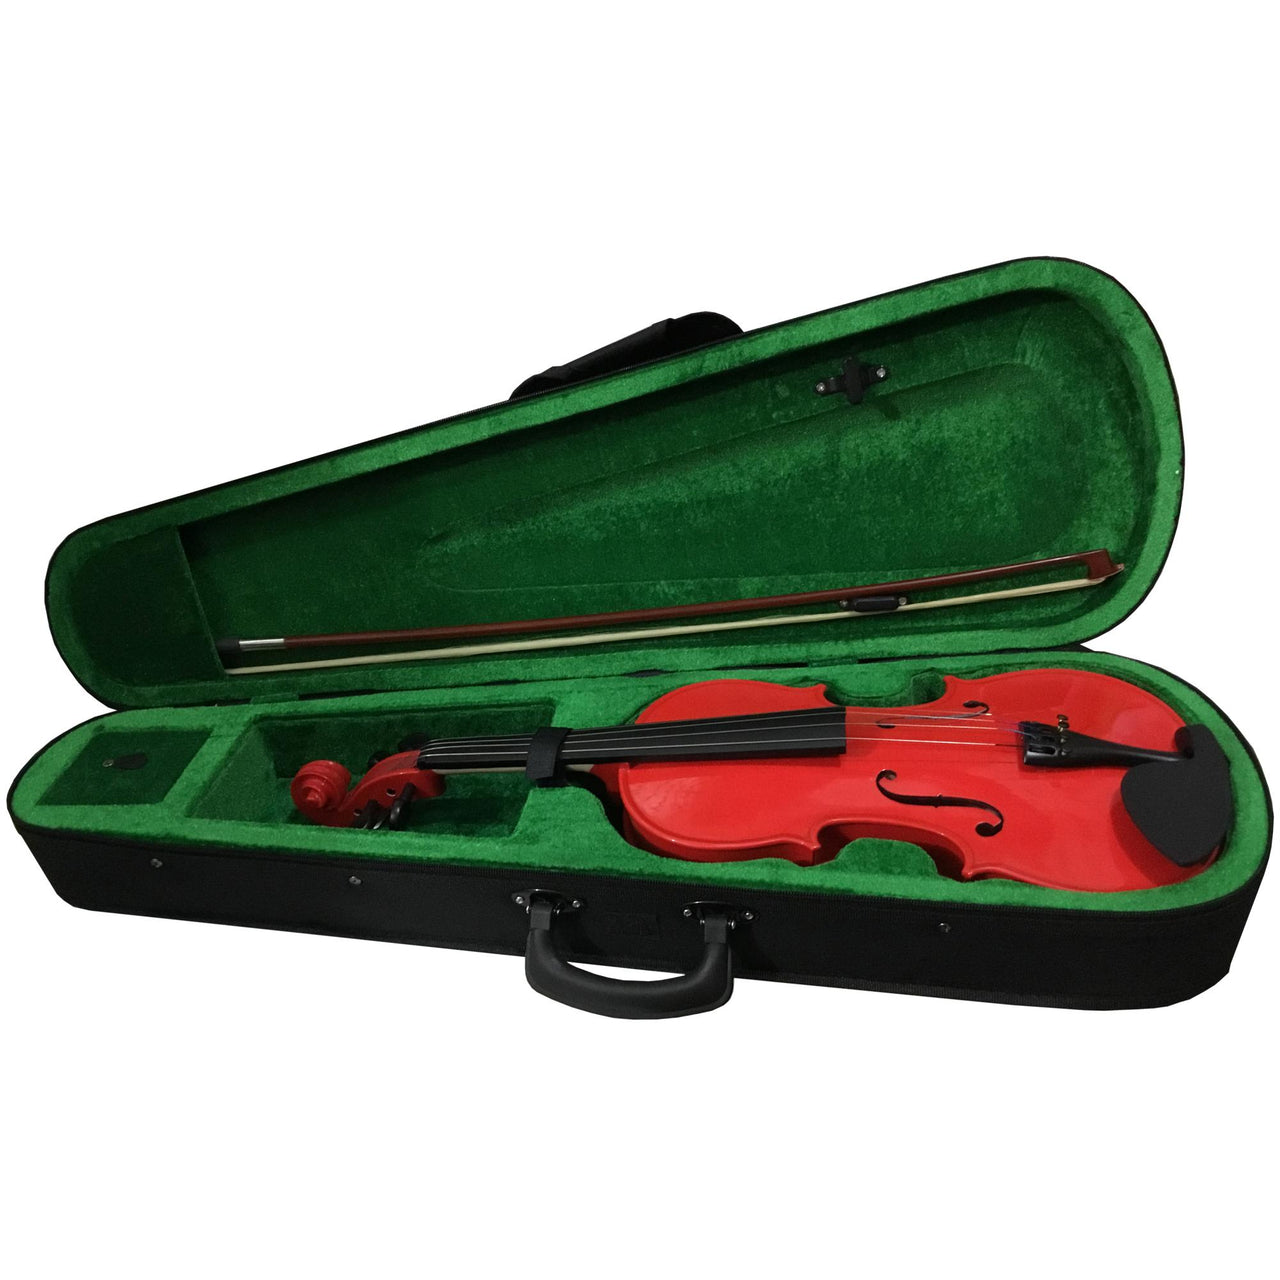 Violin Amadeus Cellini 4/4 Rojo Solid Spruce, Mv012w-rd